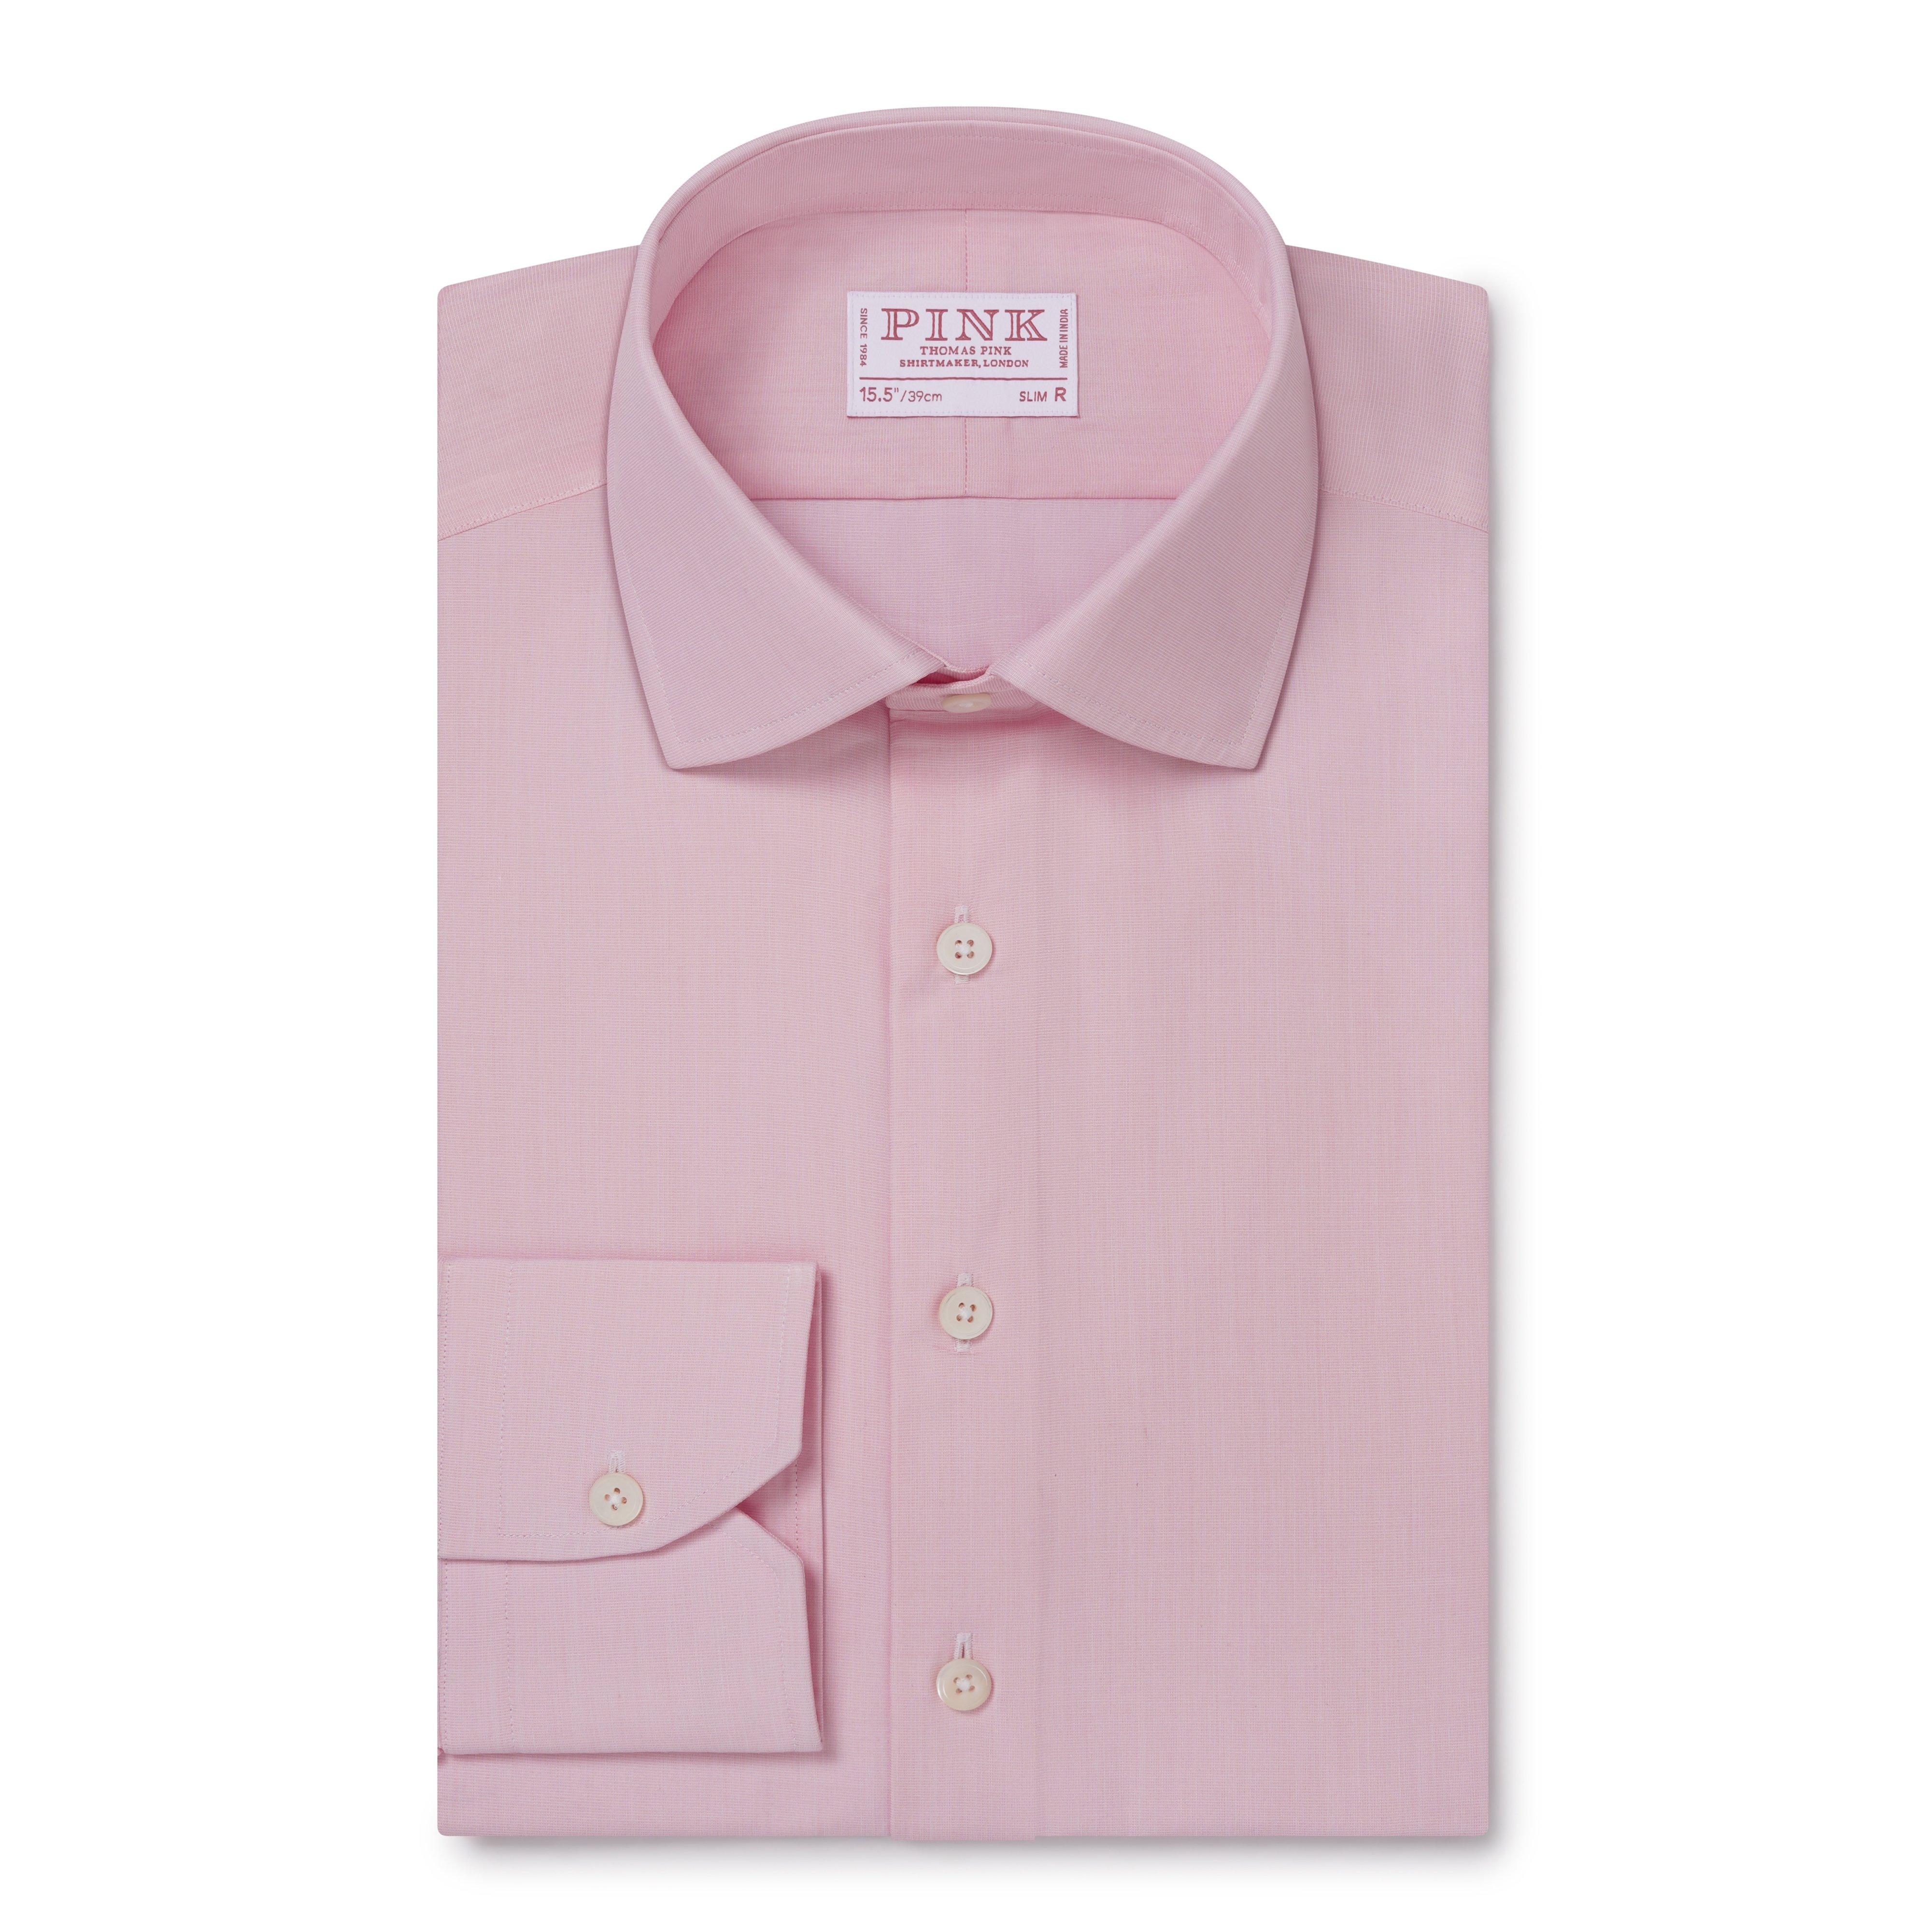 Thomas Pink Men's 14 33 Wilford Plain BC Super Slim Fit Dress Shirt NWT $185